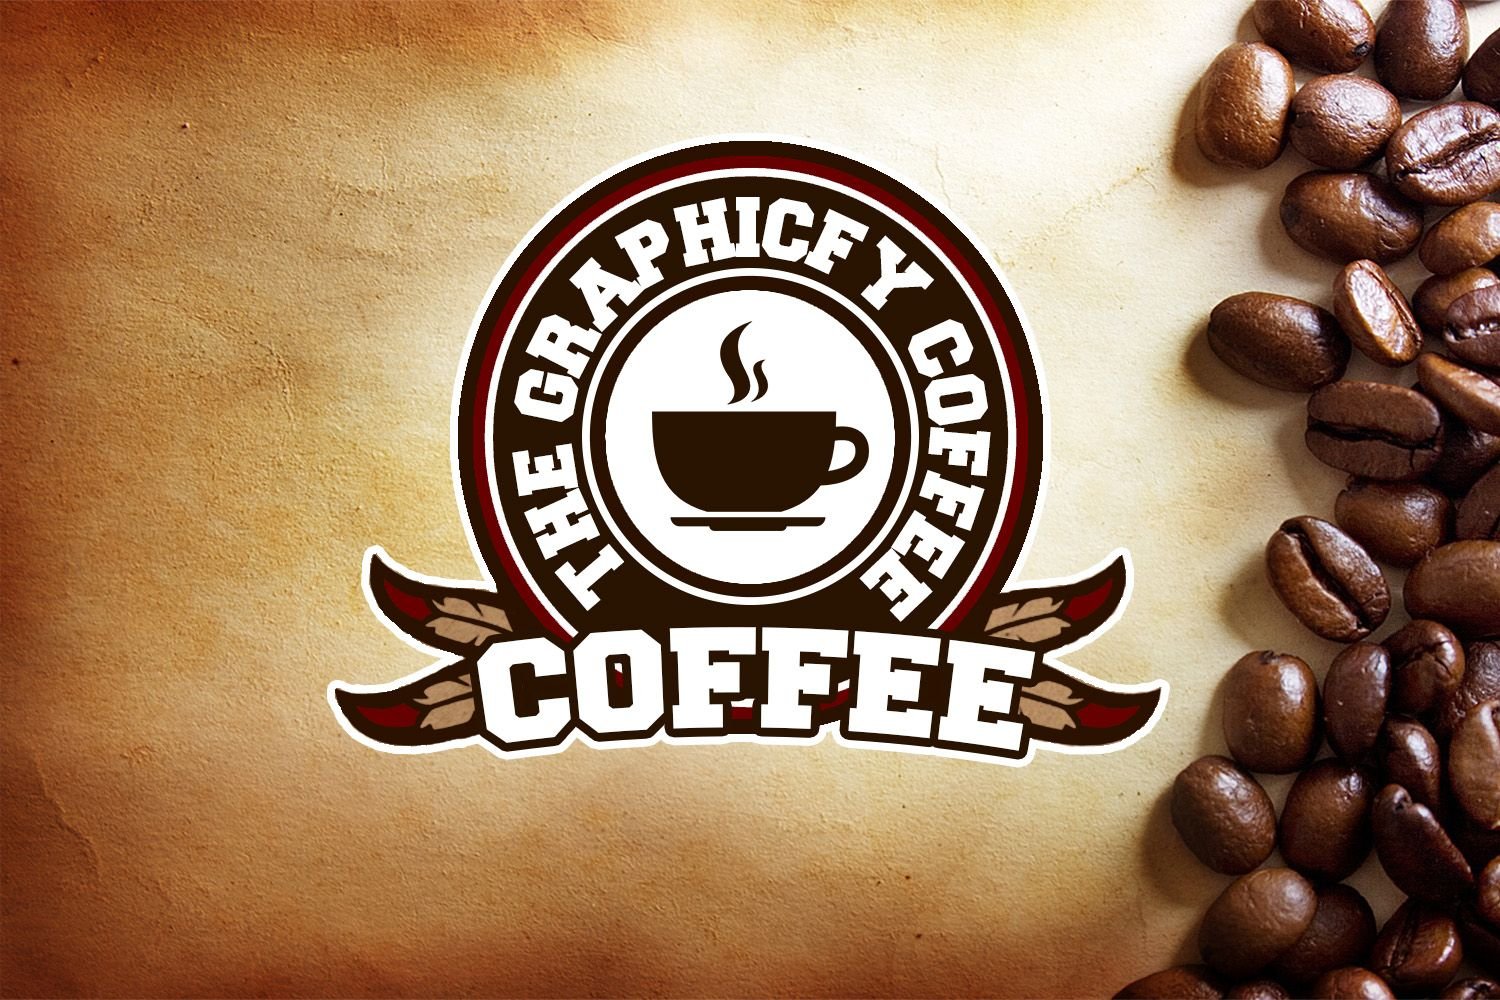 Кофейные фирмы. Эмблема кофейни. Кофейный логотип. Логотип кофейни. Логотип кофейни кофе шоп.